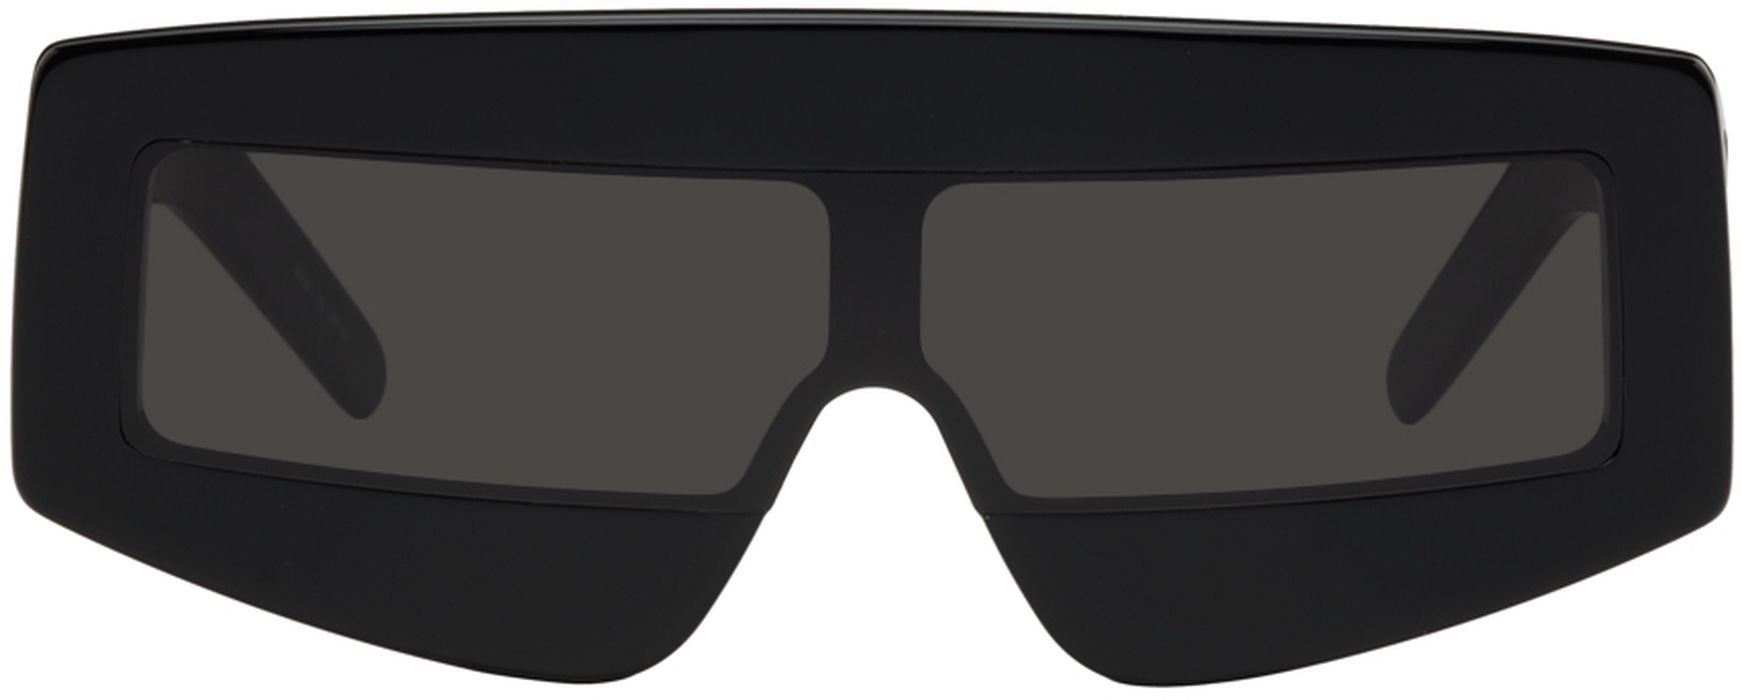 Rick Owens Black Phleg Sunglasses